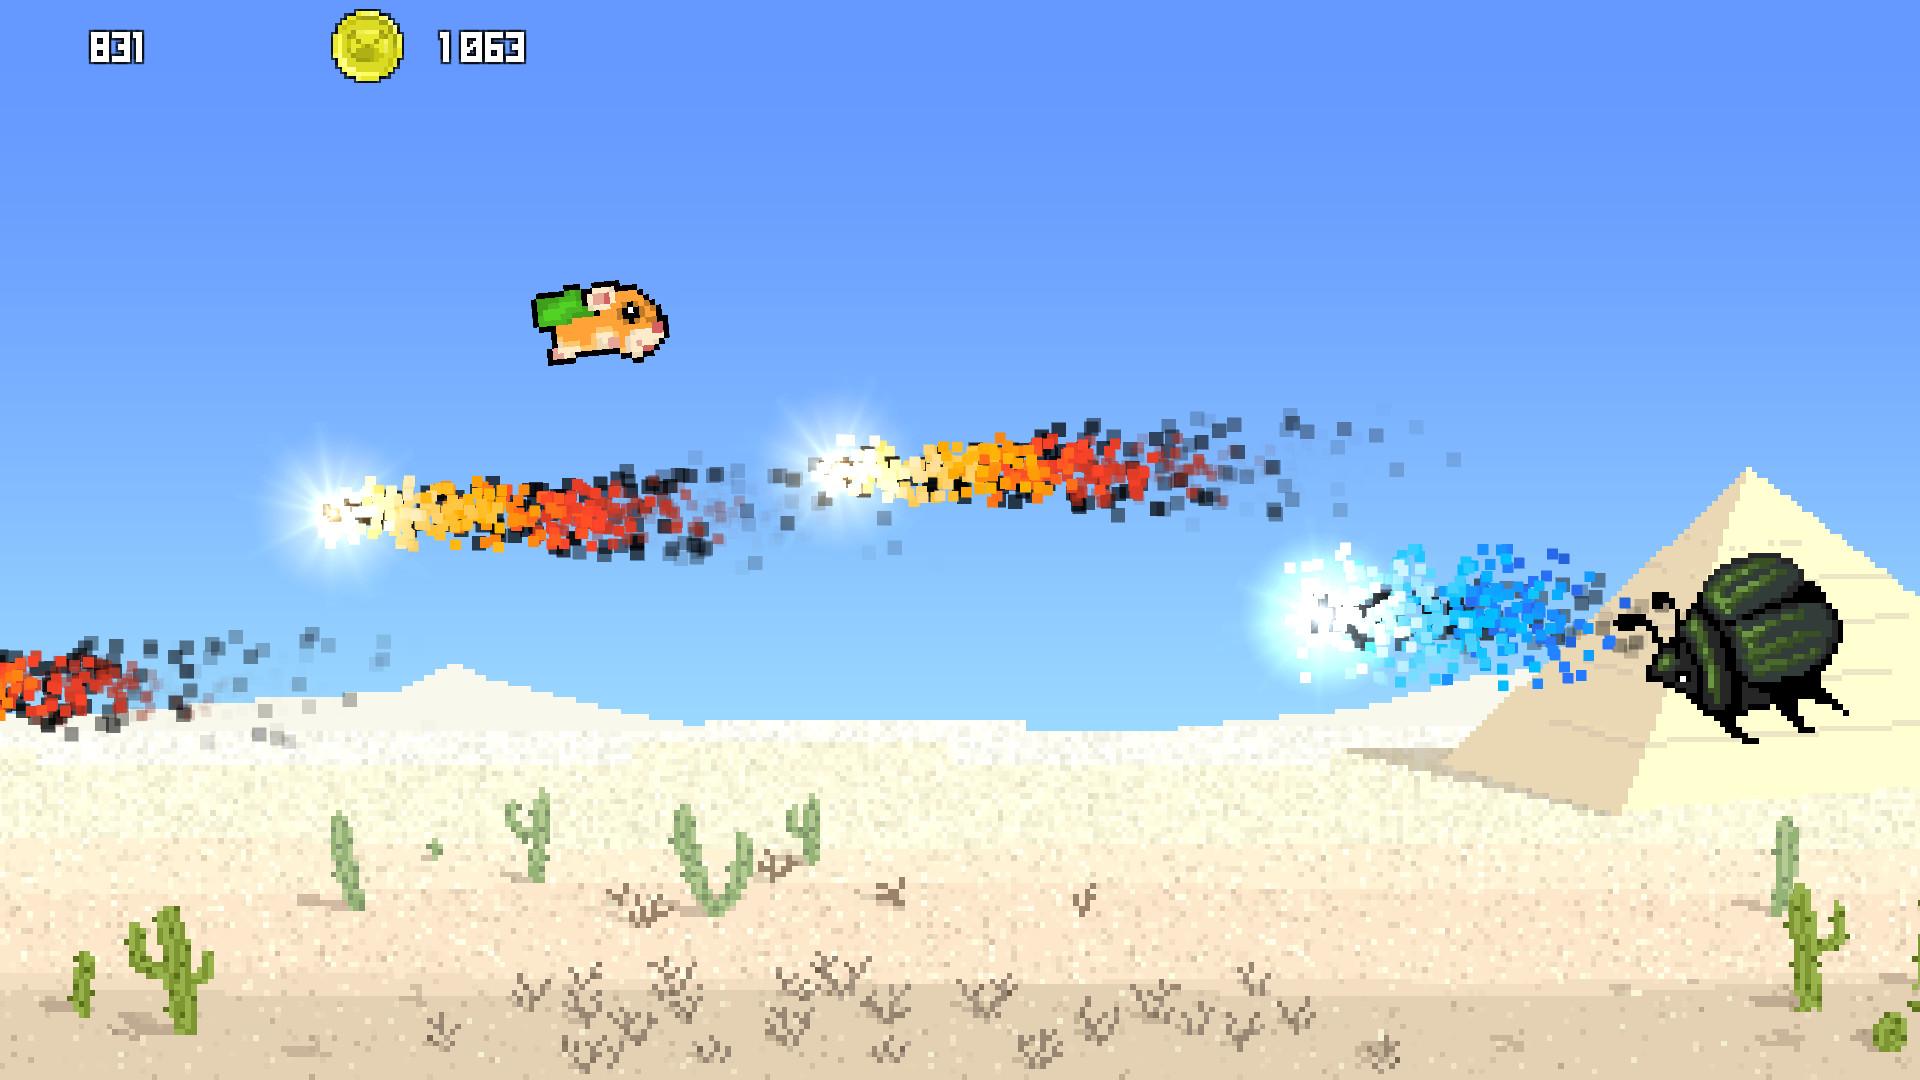 Screenshot №3 from game Super Mega Neo Pug